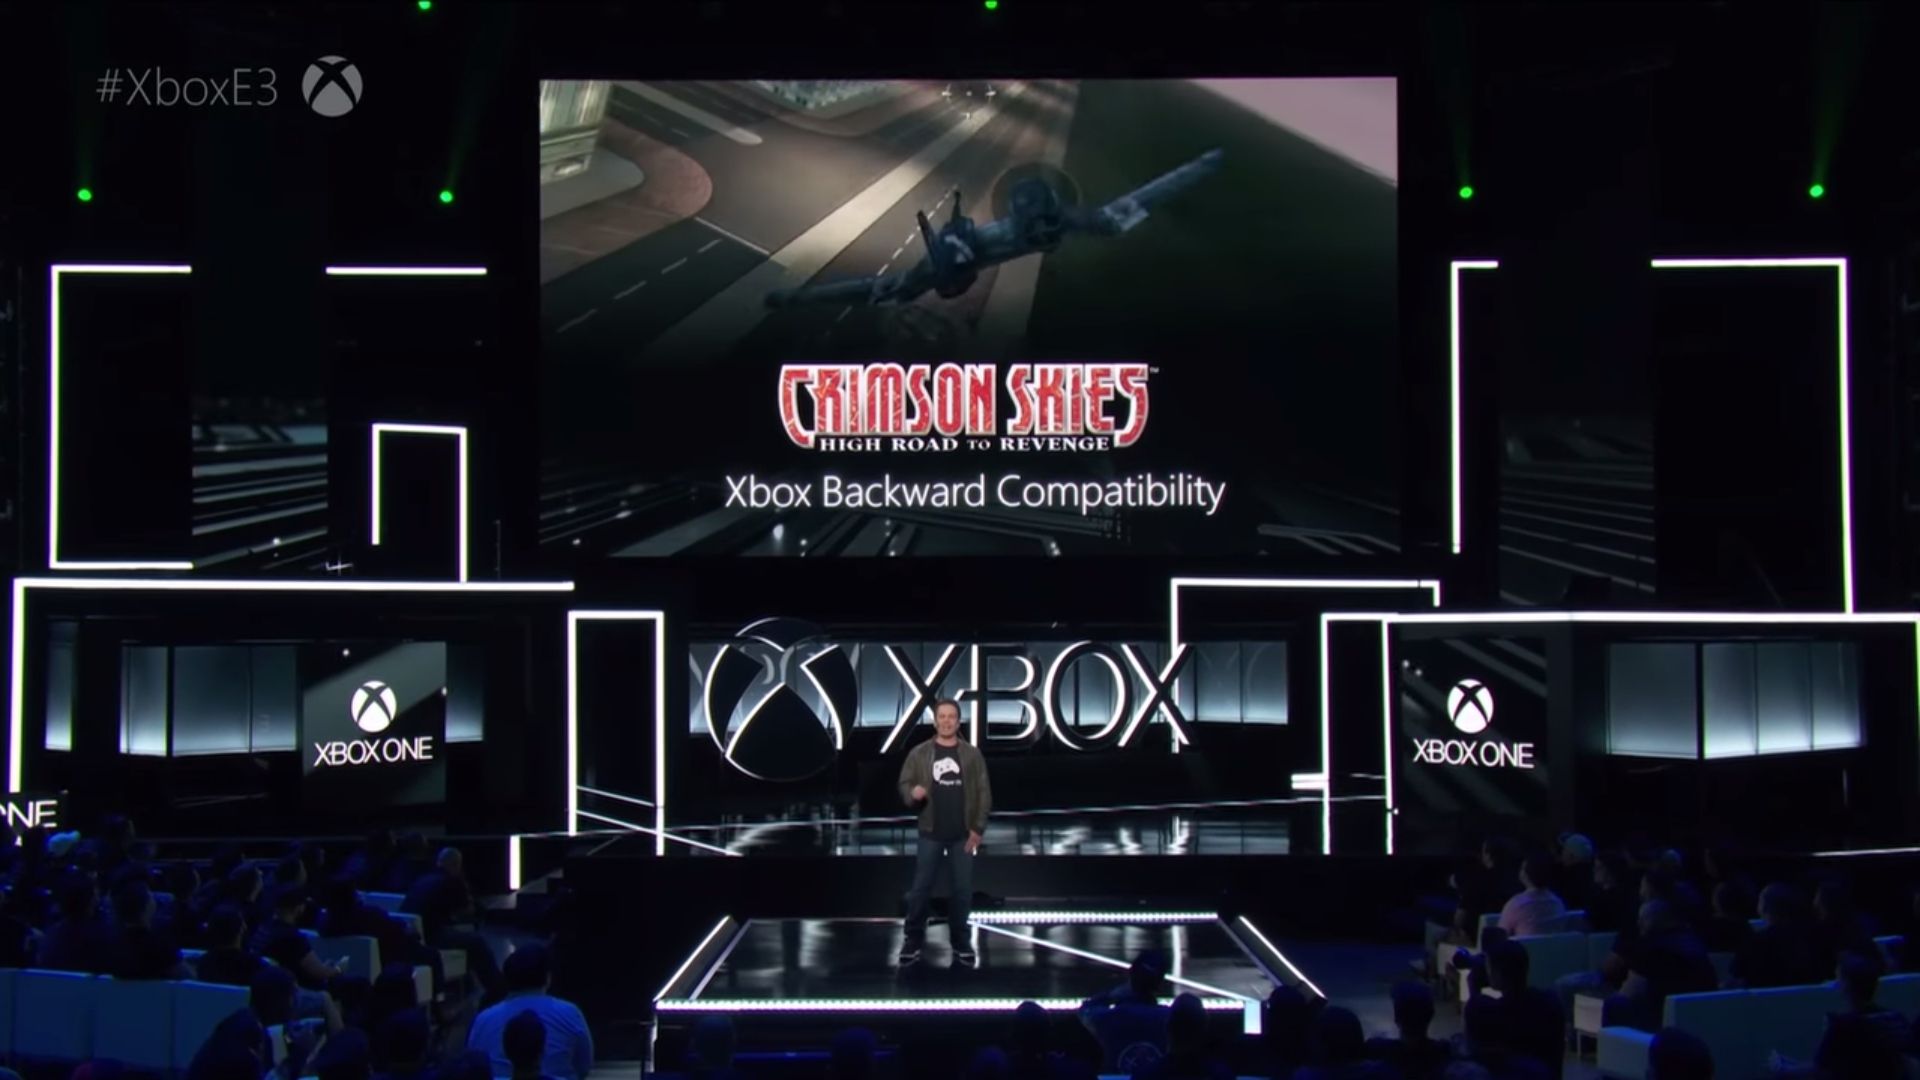 Original Xbox Games Come To Xbox One Backward Compatibility